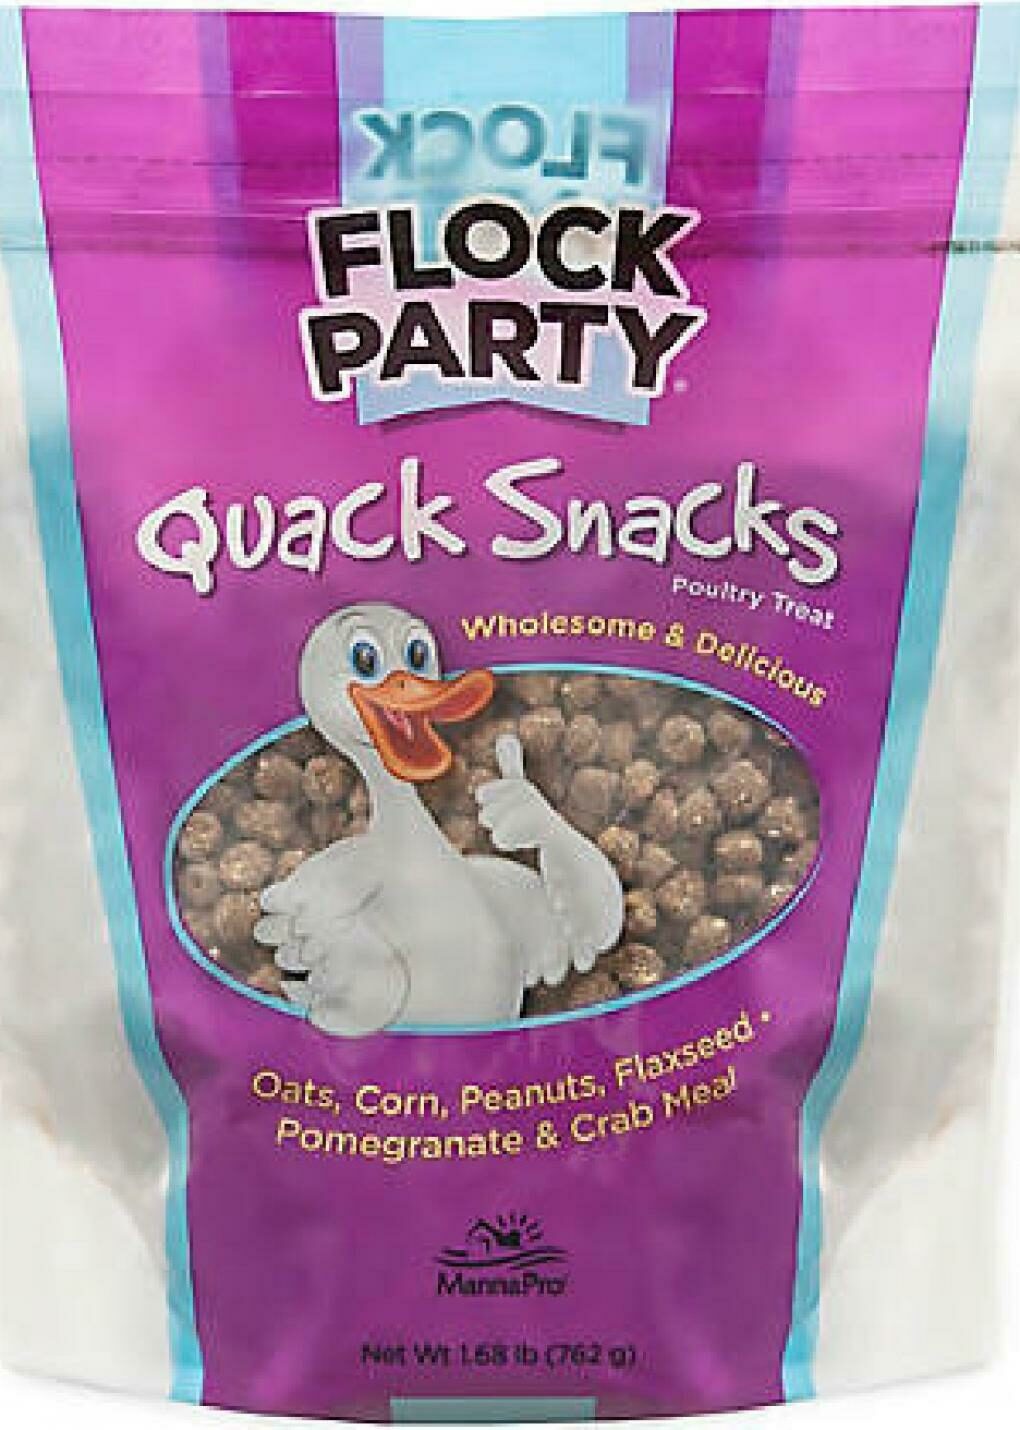 Manna Pro Products recalls Flock Party Quack Snacks